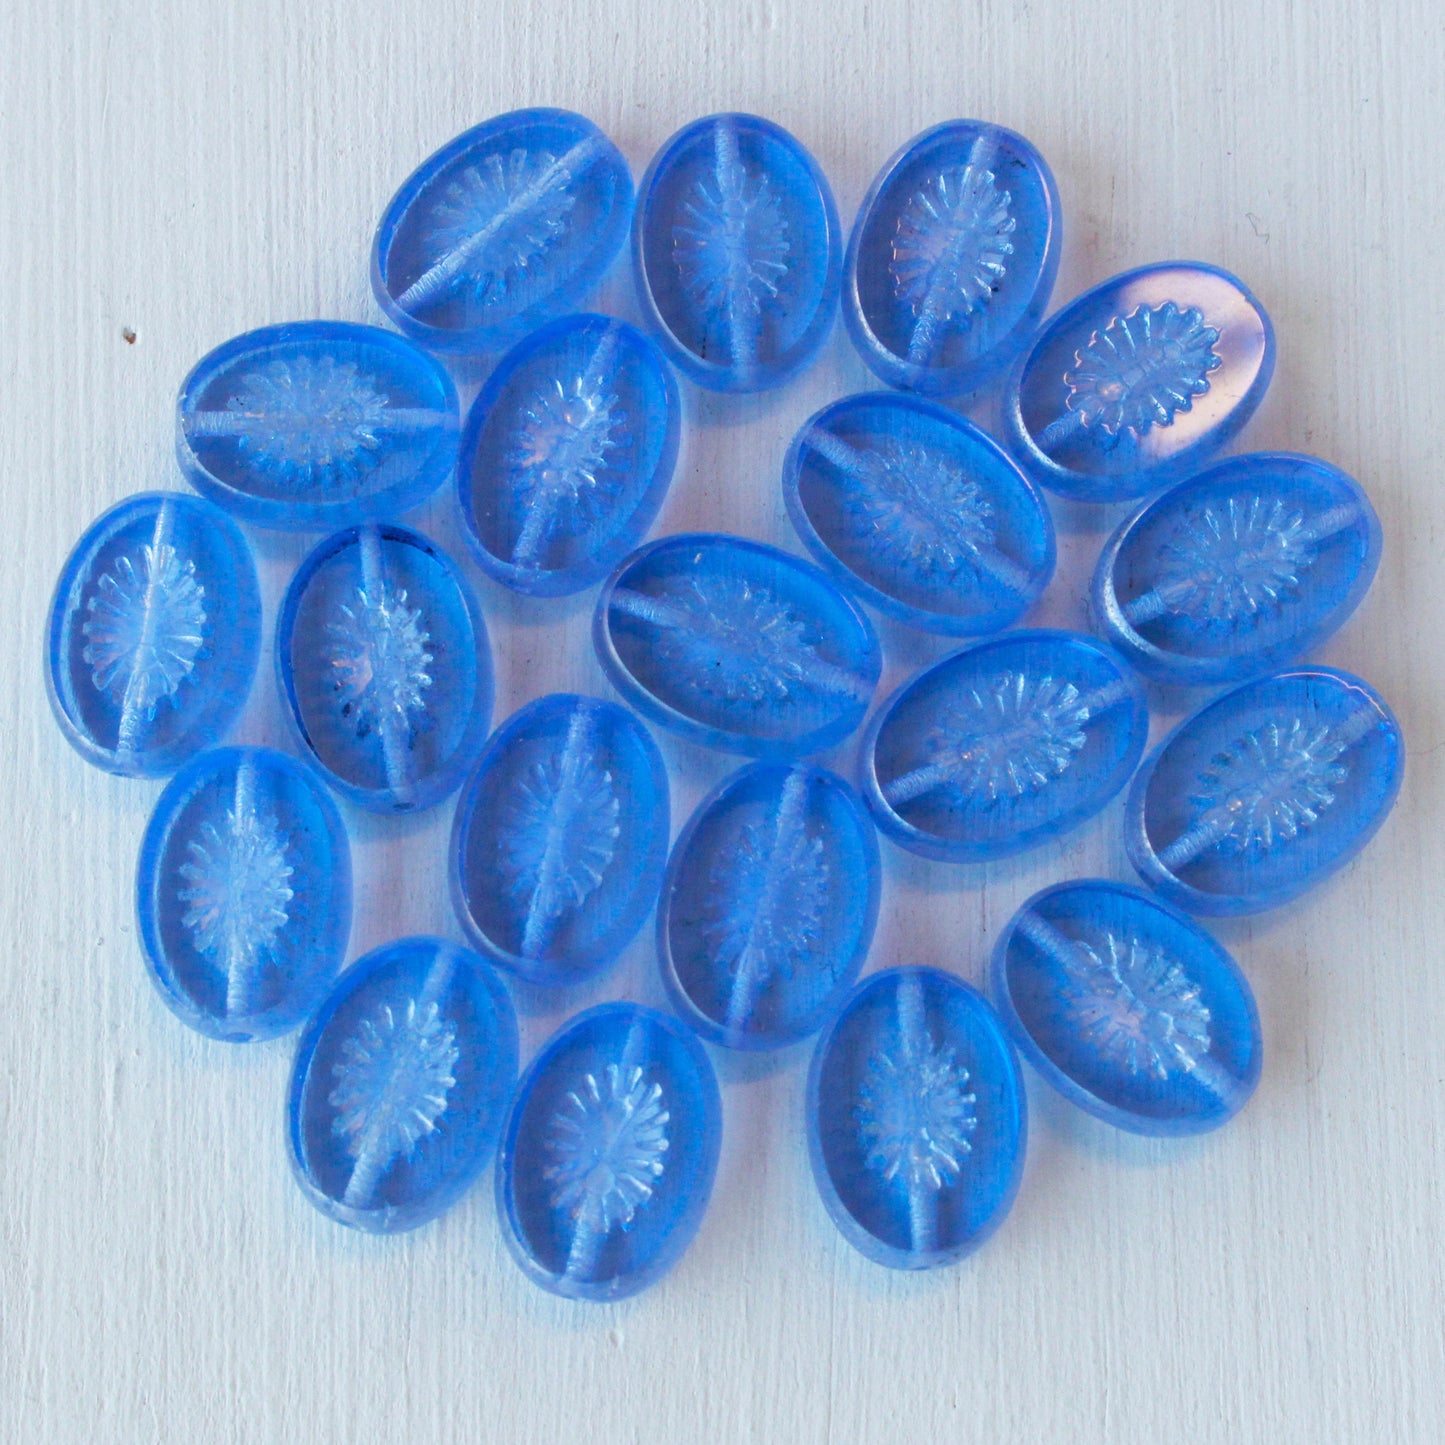 12x14mm Glass Kiwi Beads - Sky Blue - 10 Beads